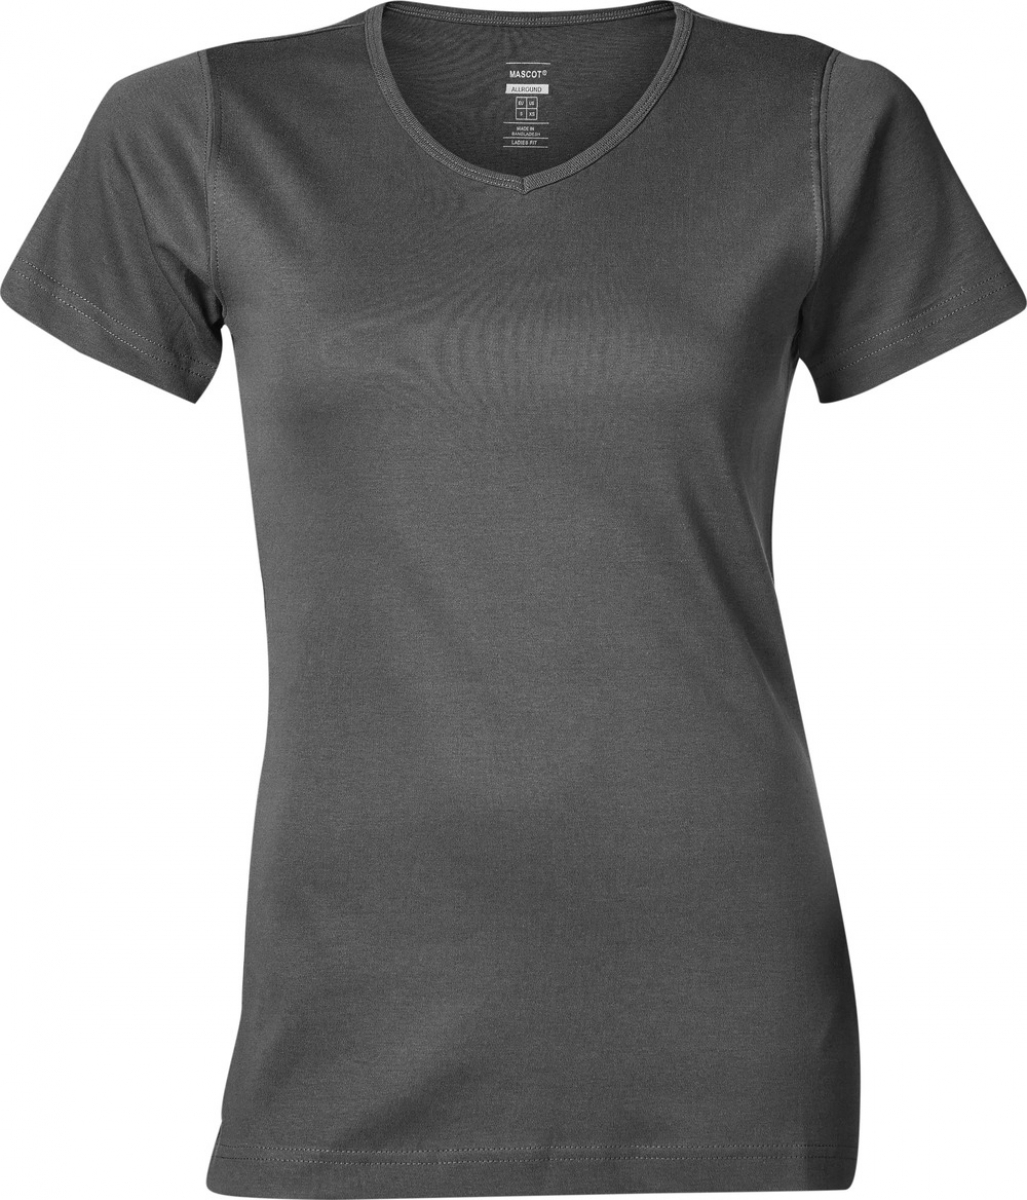 MASCOT-Worker-Shirts, Damen-T-Shirt, Nice, 220 g/m, anthrazit